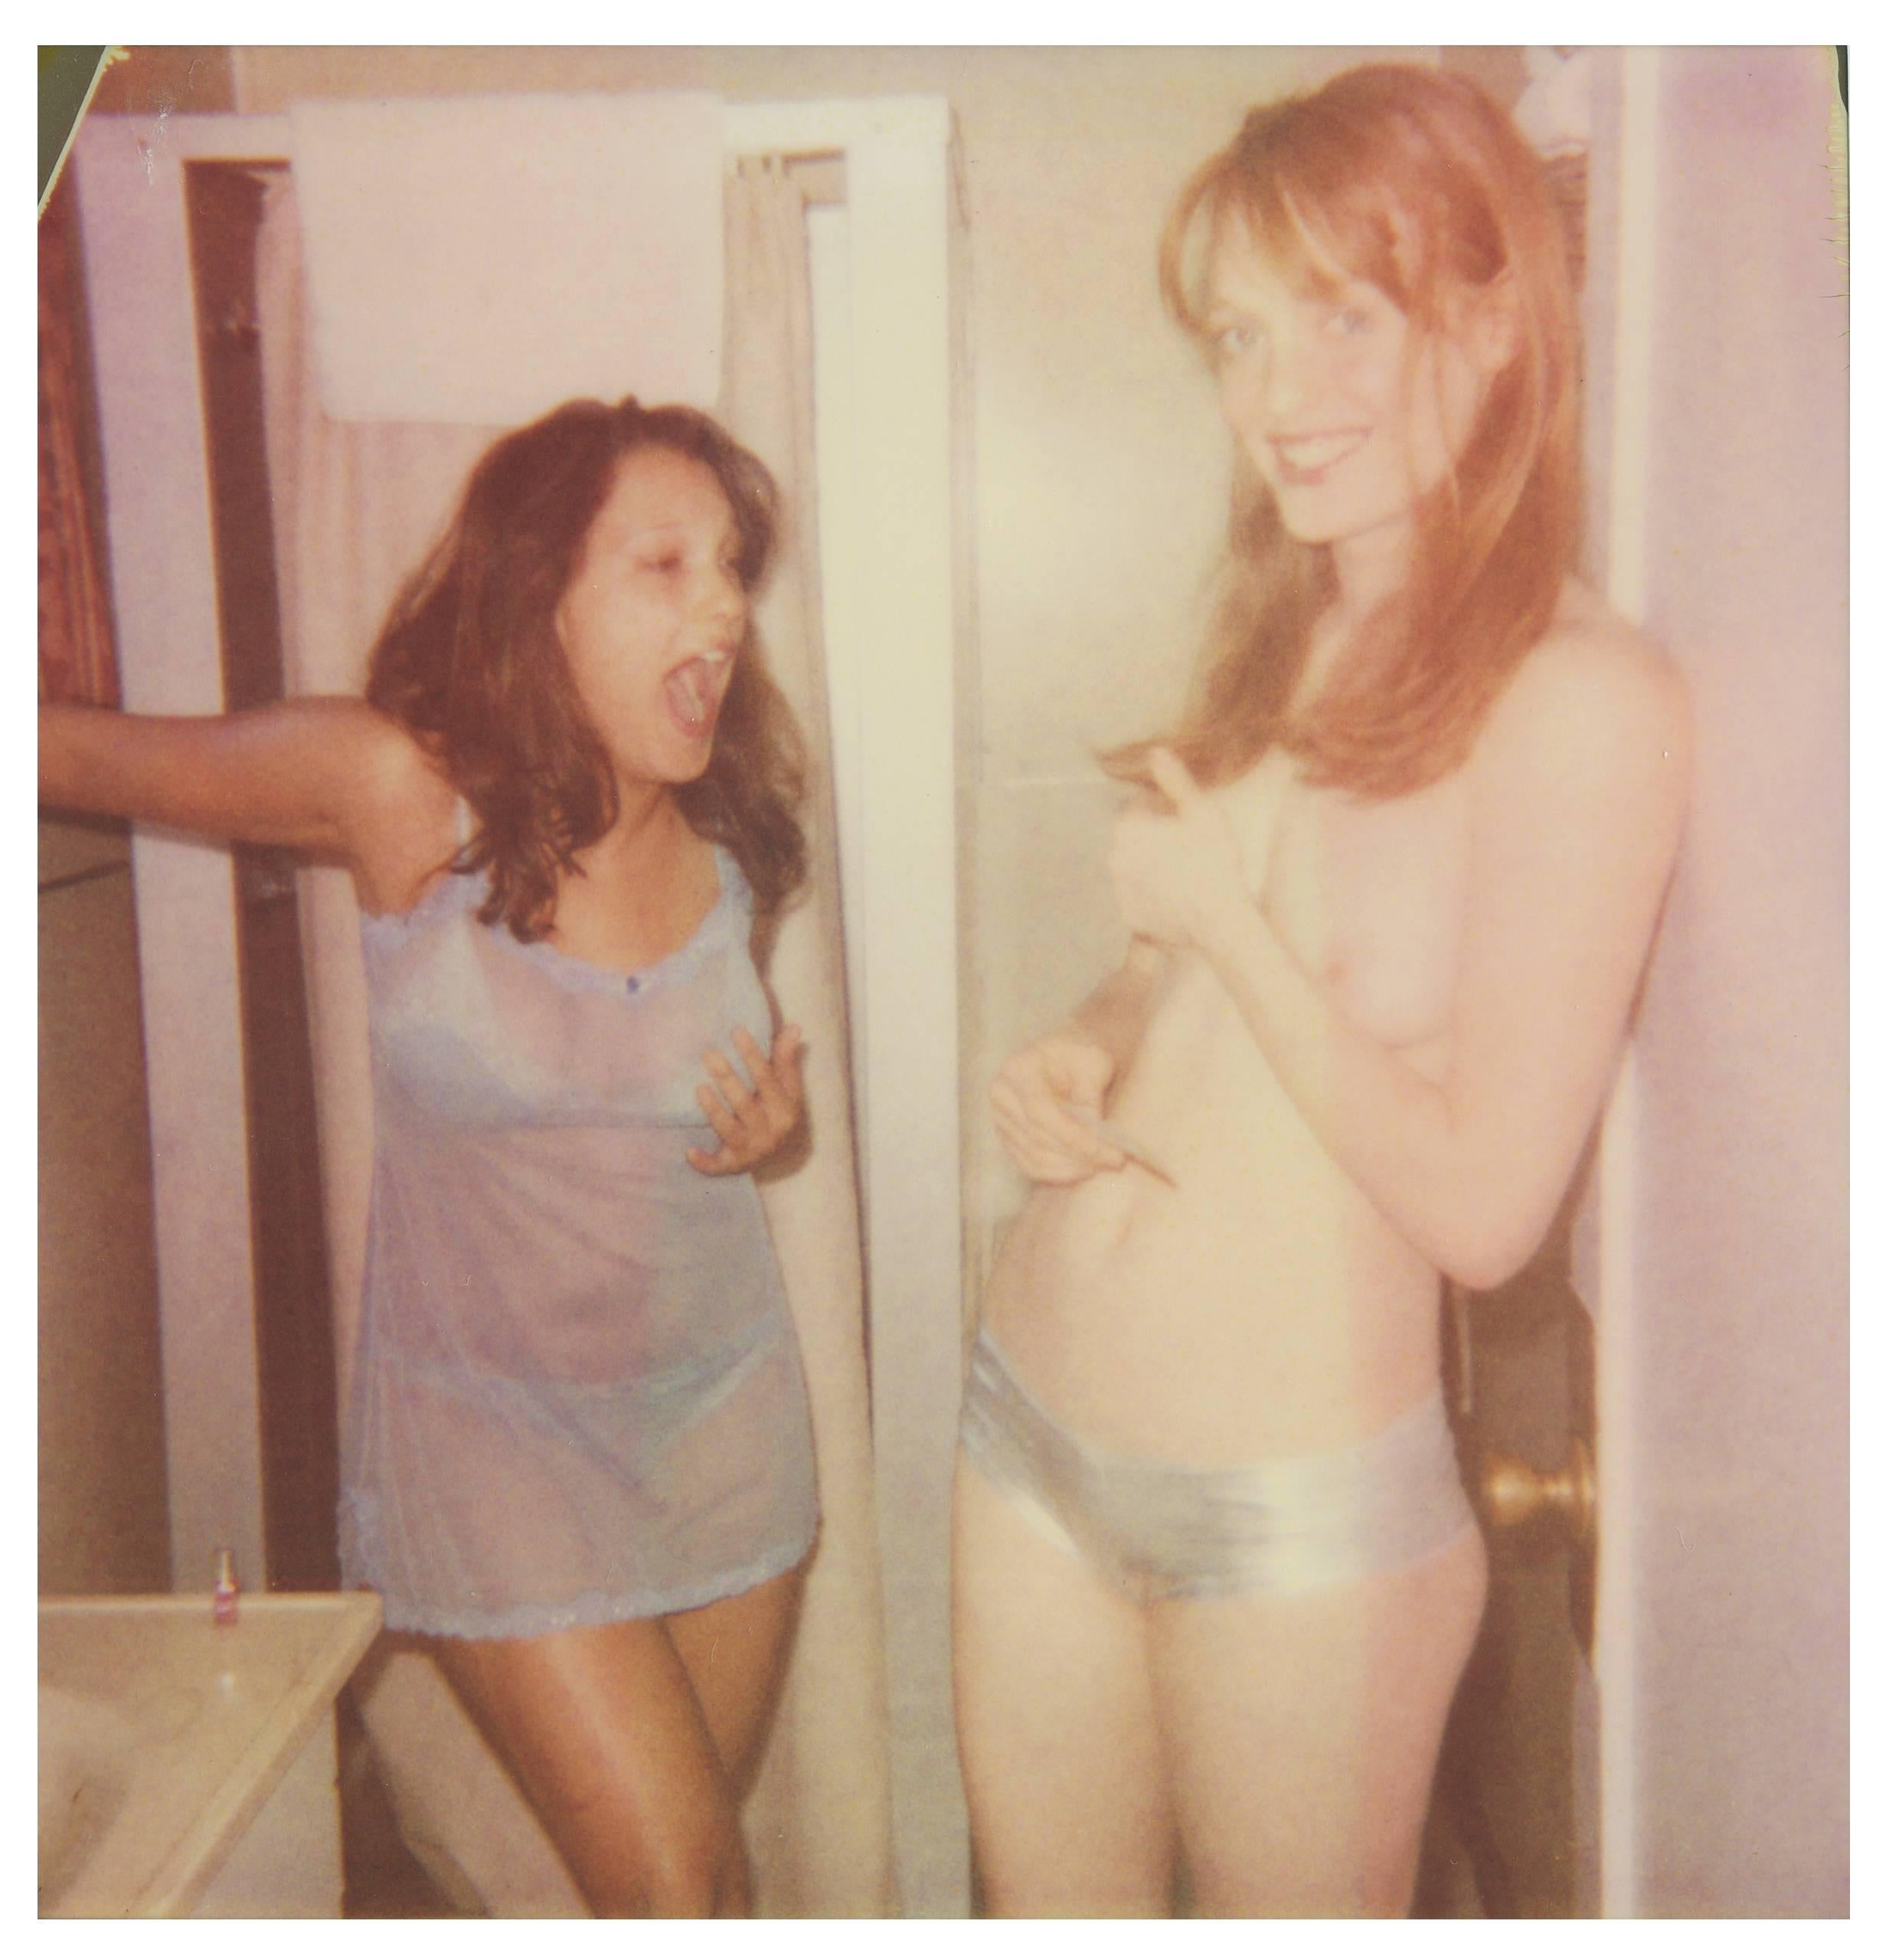 Stefanie Schneider Nude Photograph - 'Happy Days' from Till Death do us Part with Daisy McCrackin based on a Polaroid